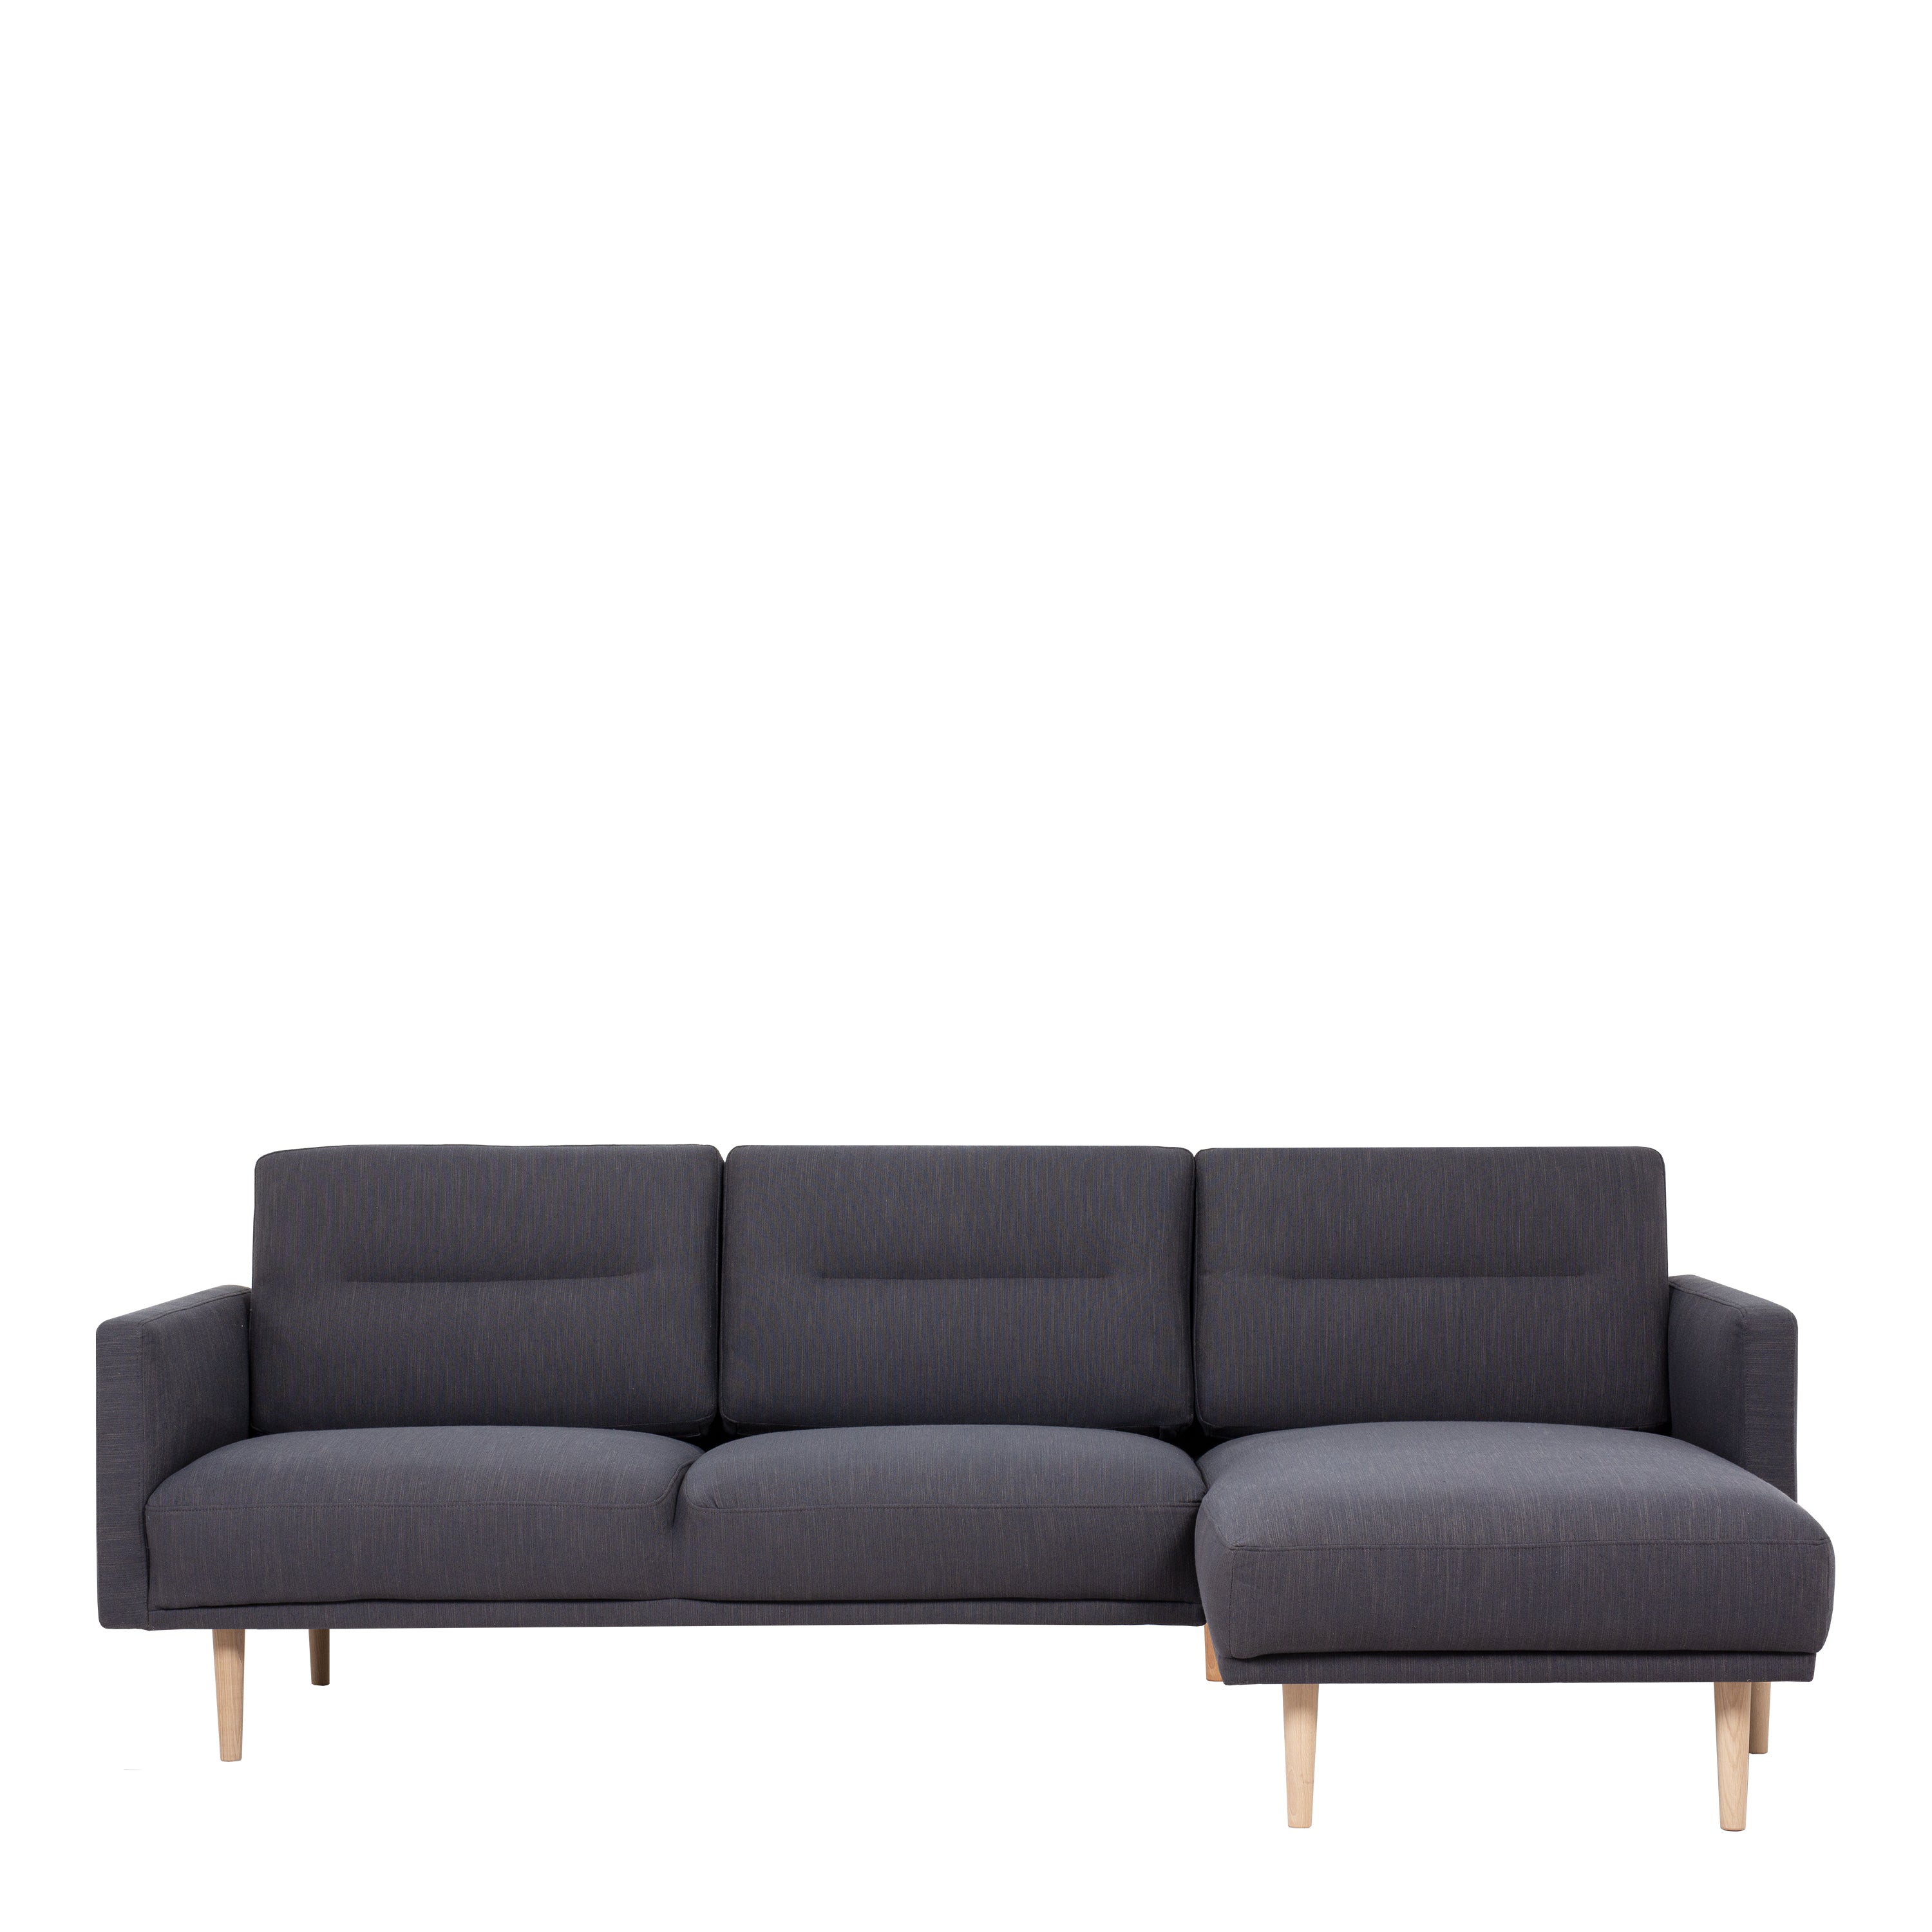 Larvik Chaiselongue Sofa (RH) - Anthracite, Oak Legs